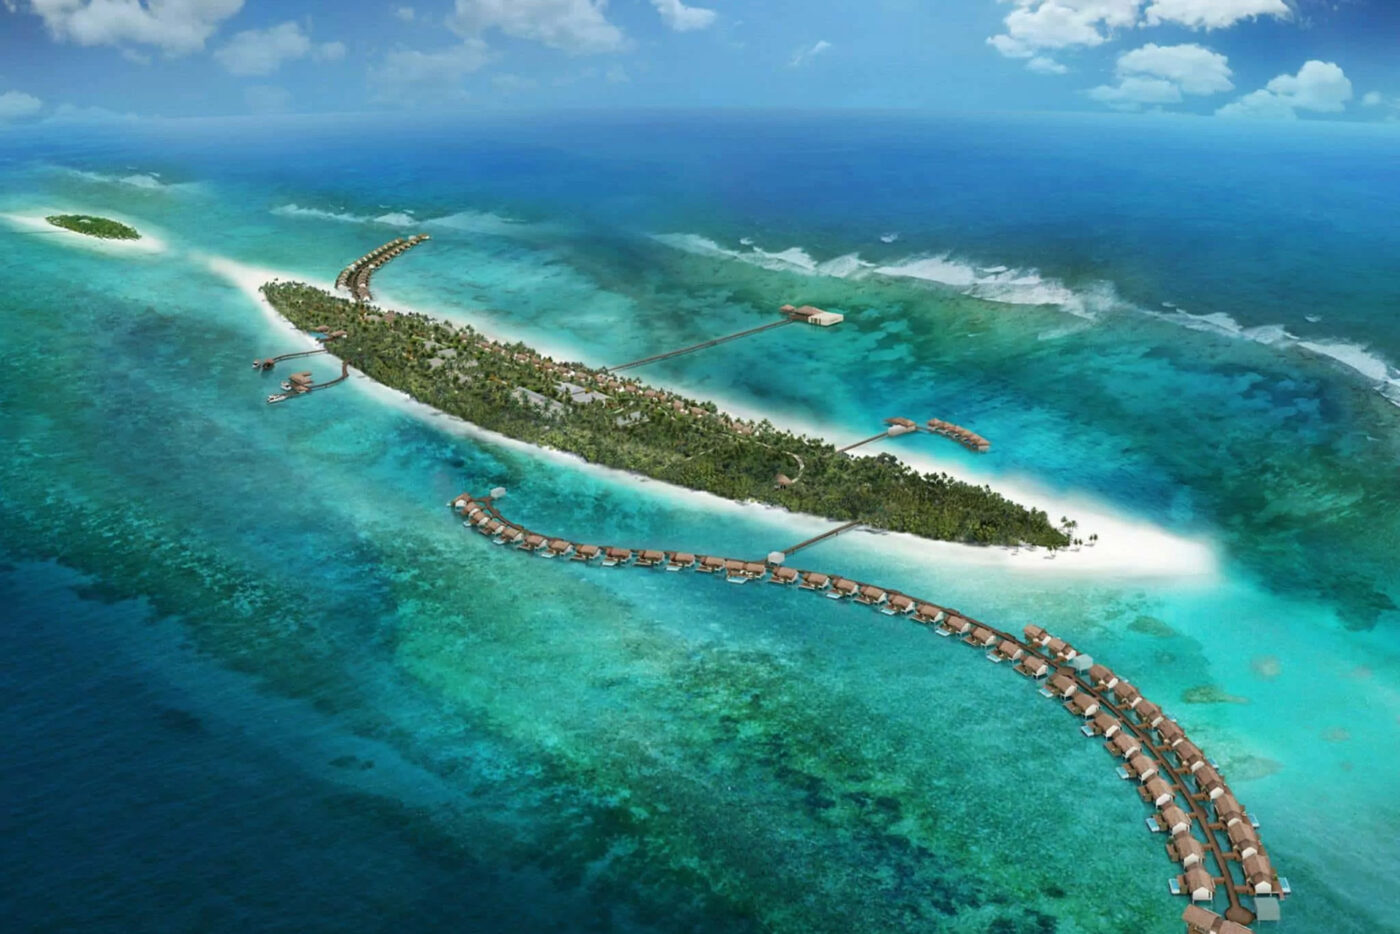 The Residence Maldives resort